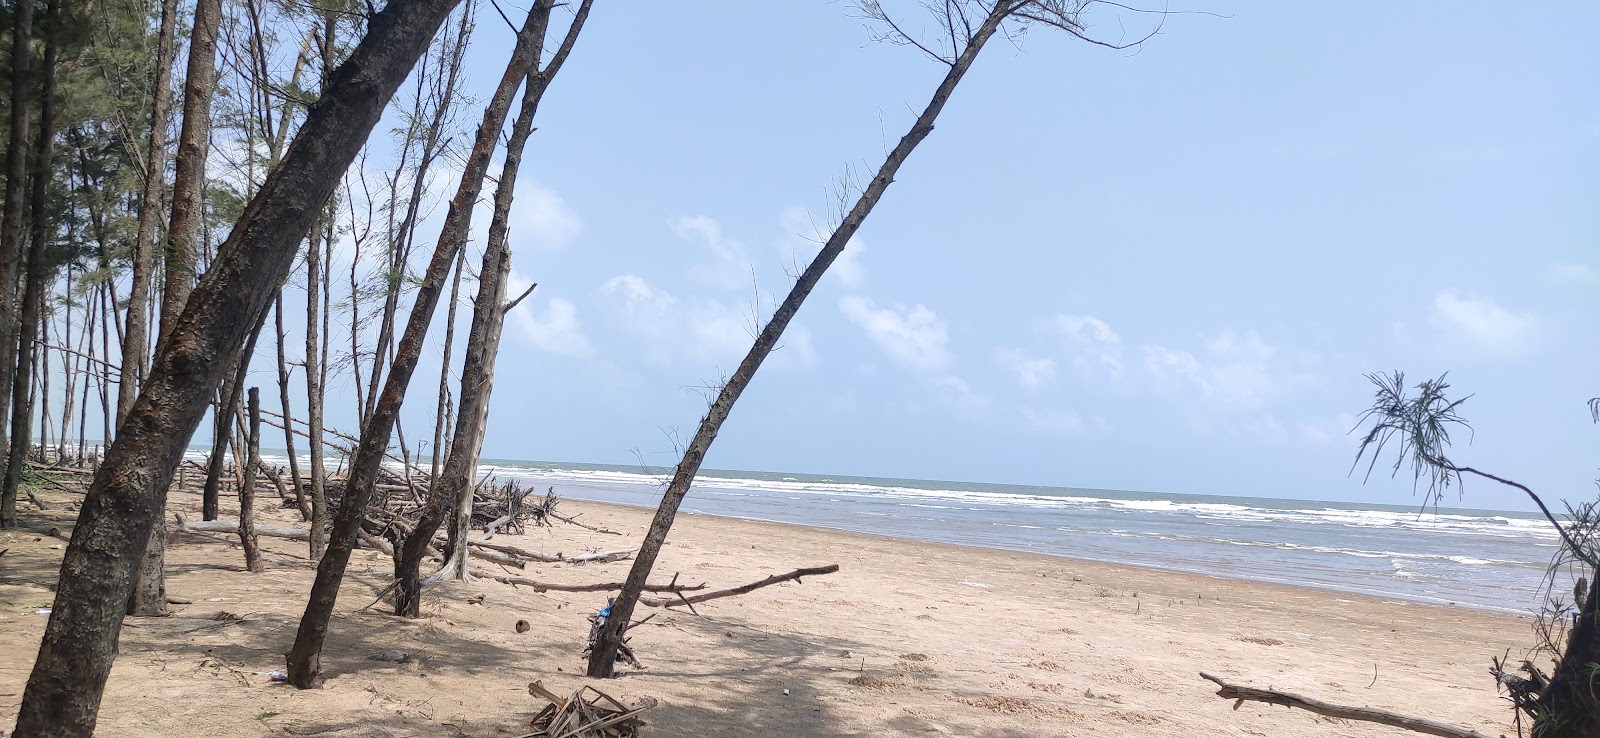 Fotografie cu Kiagoria Beach cu nivelul de curățenie in medie